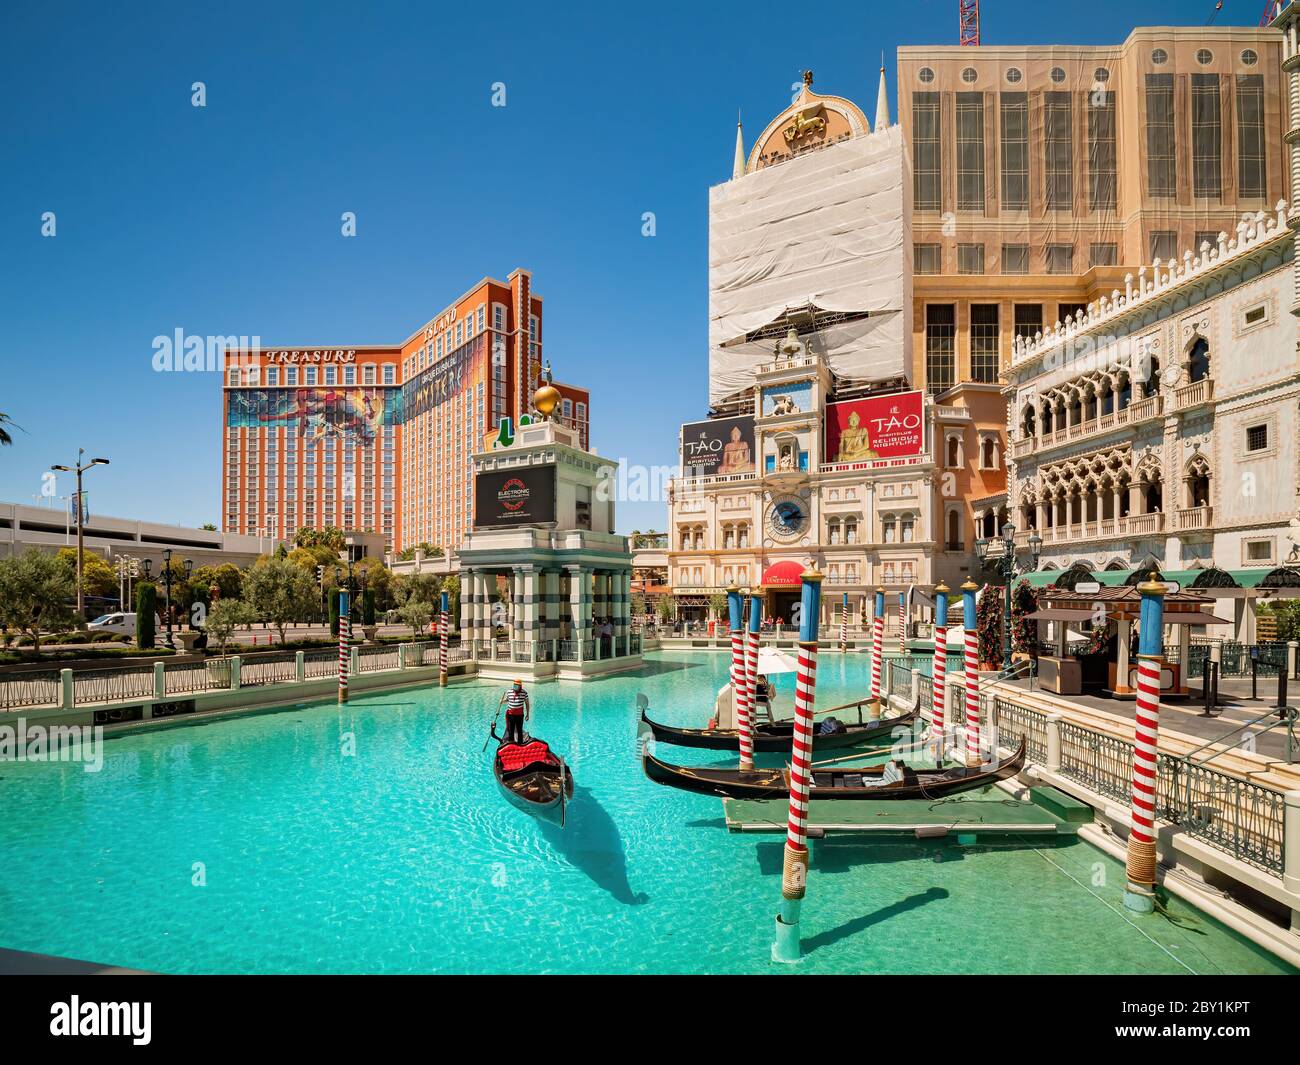 Las Vegas, 8 GIUGNO 2020 - Vista esterna del Casinò Venetian dopo la riapertura Foto Stock